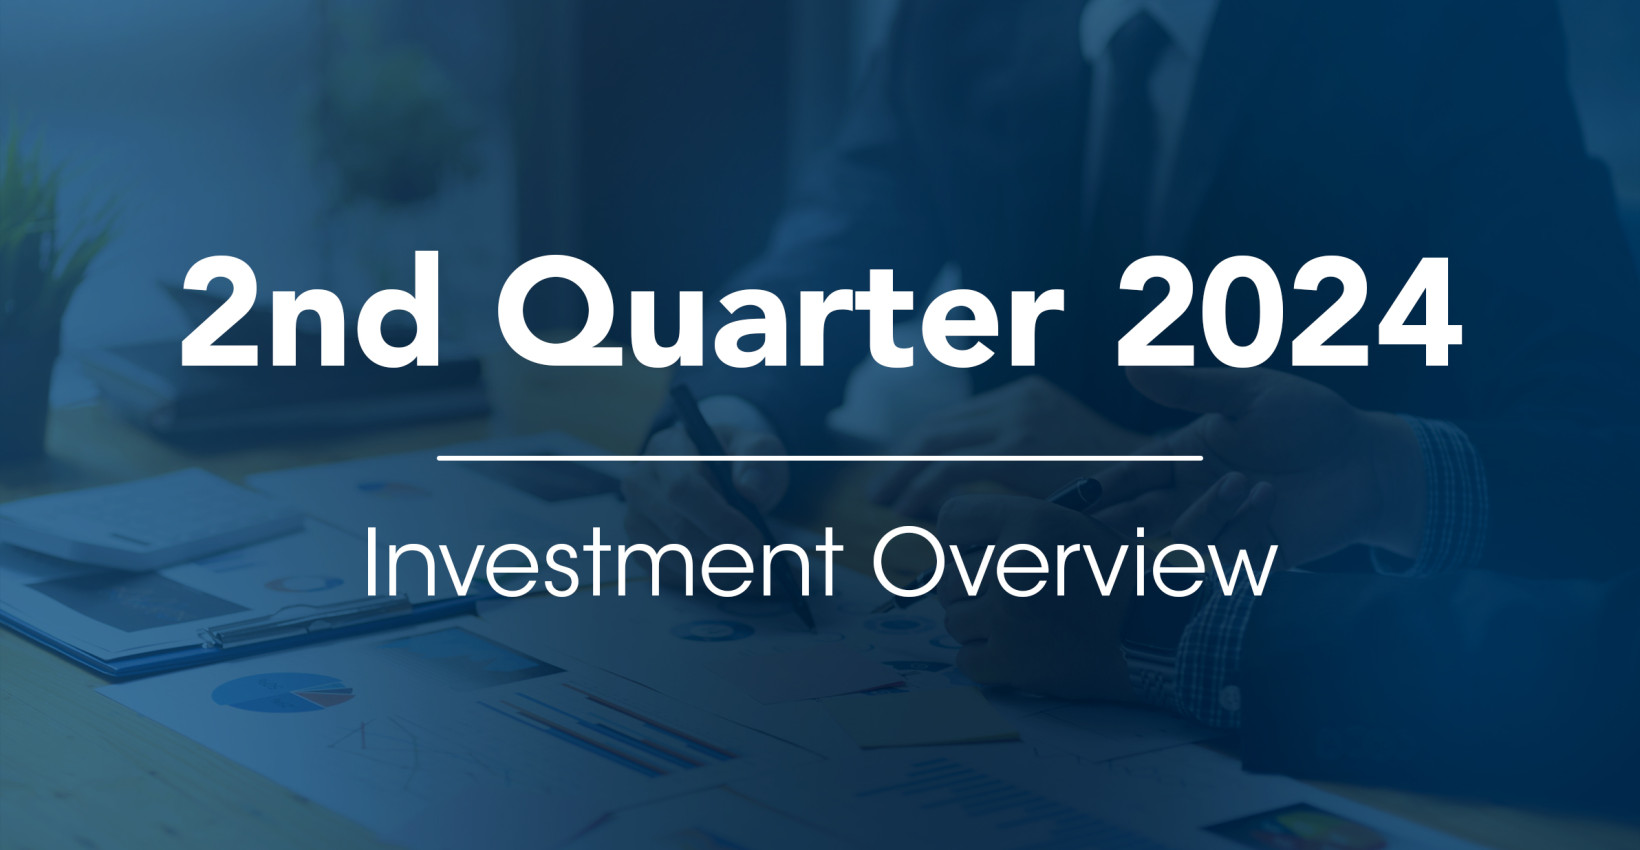 2nd Quarter 2024 Investment Overview header image